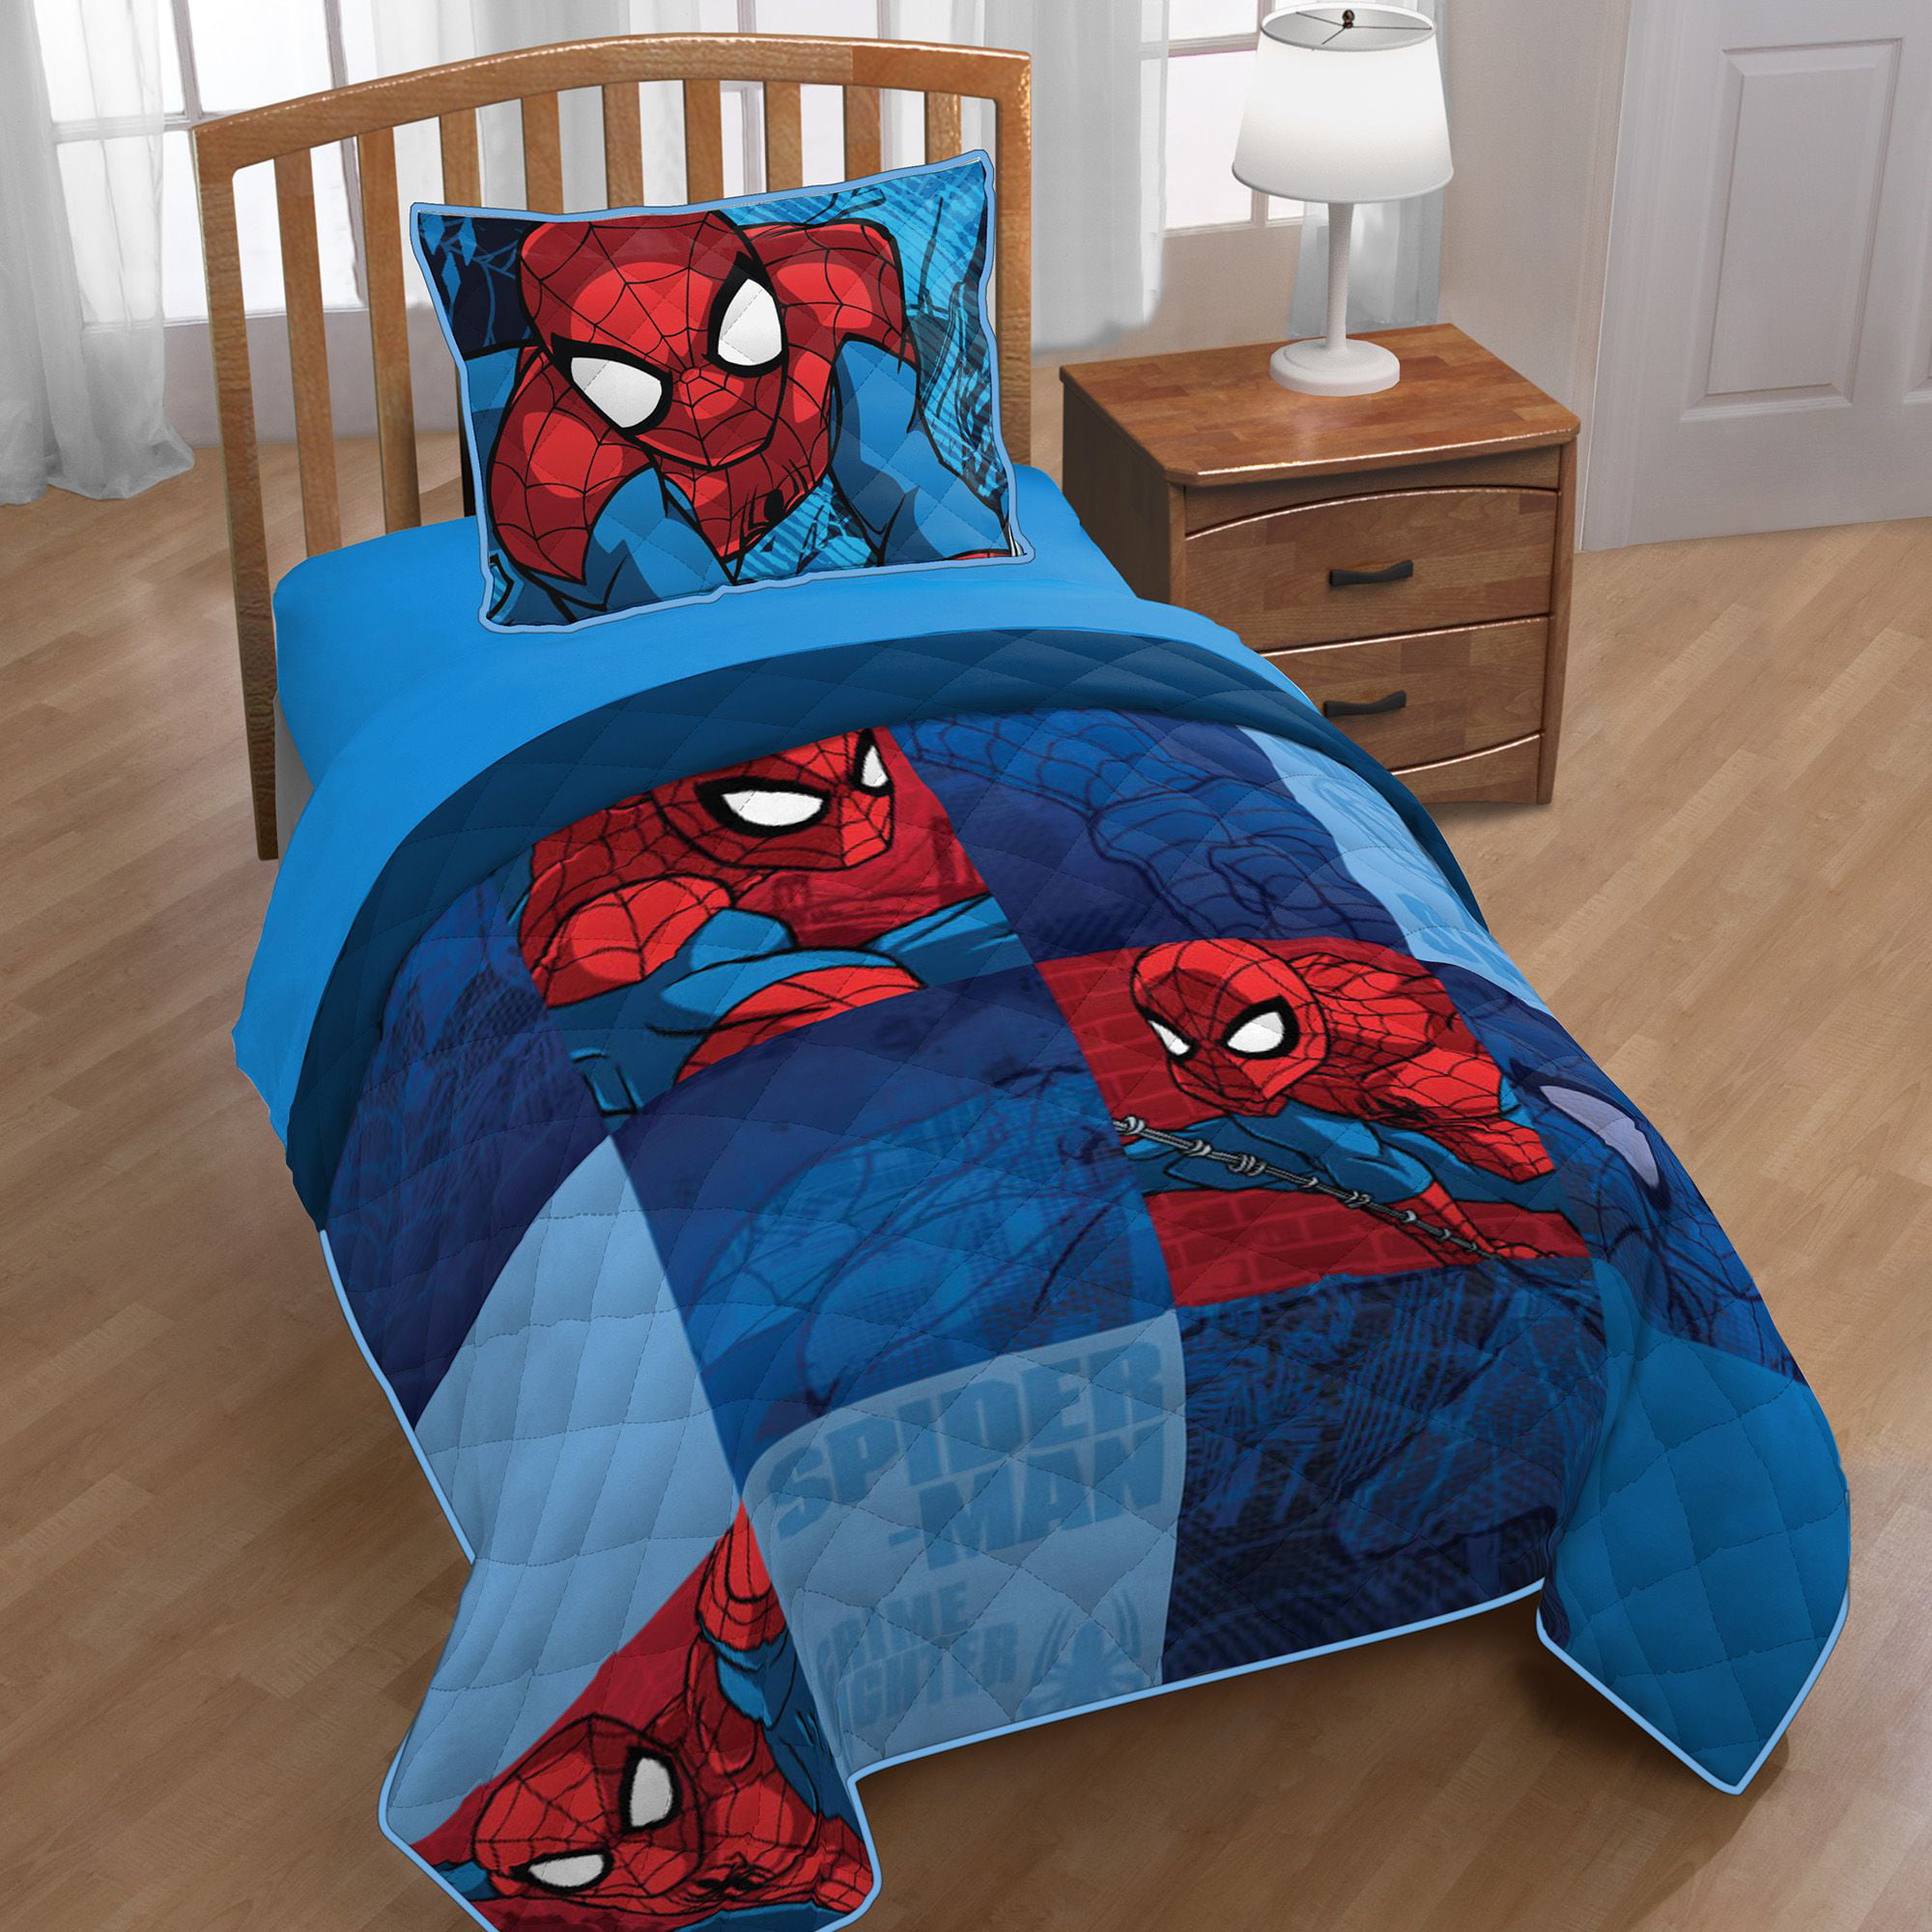 Marvel Spider-Man Twin Comforter and Sham Set Super Soft NWT 